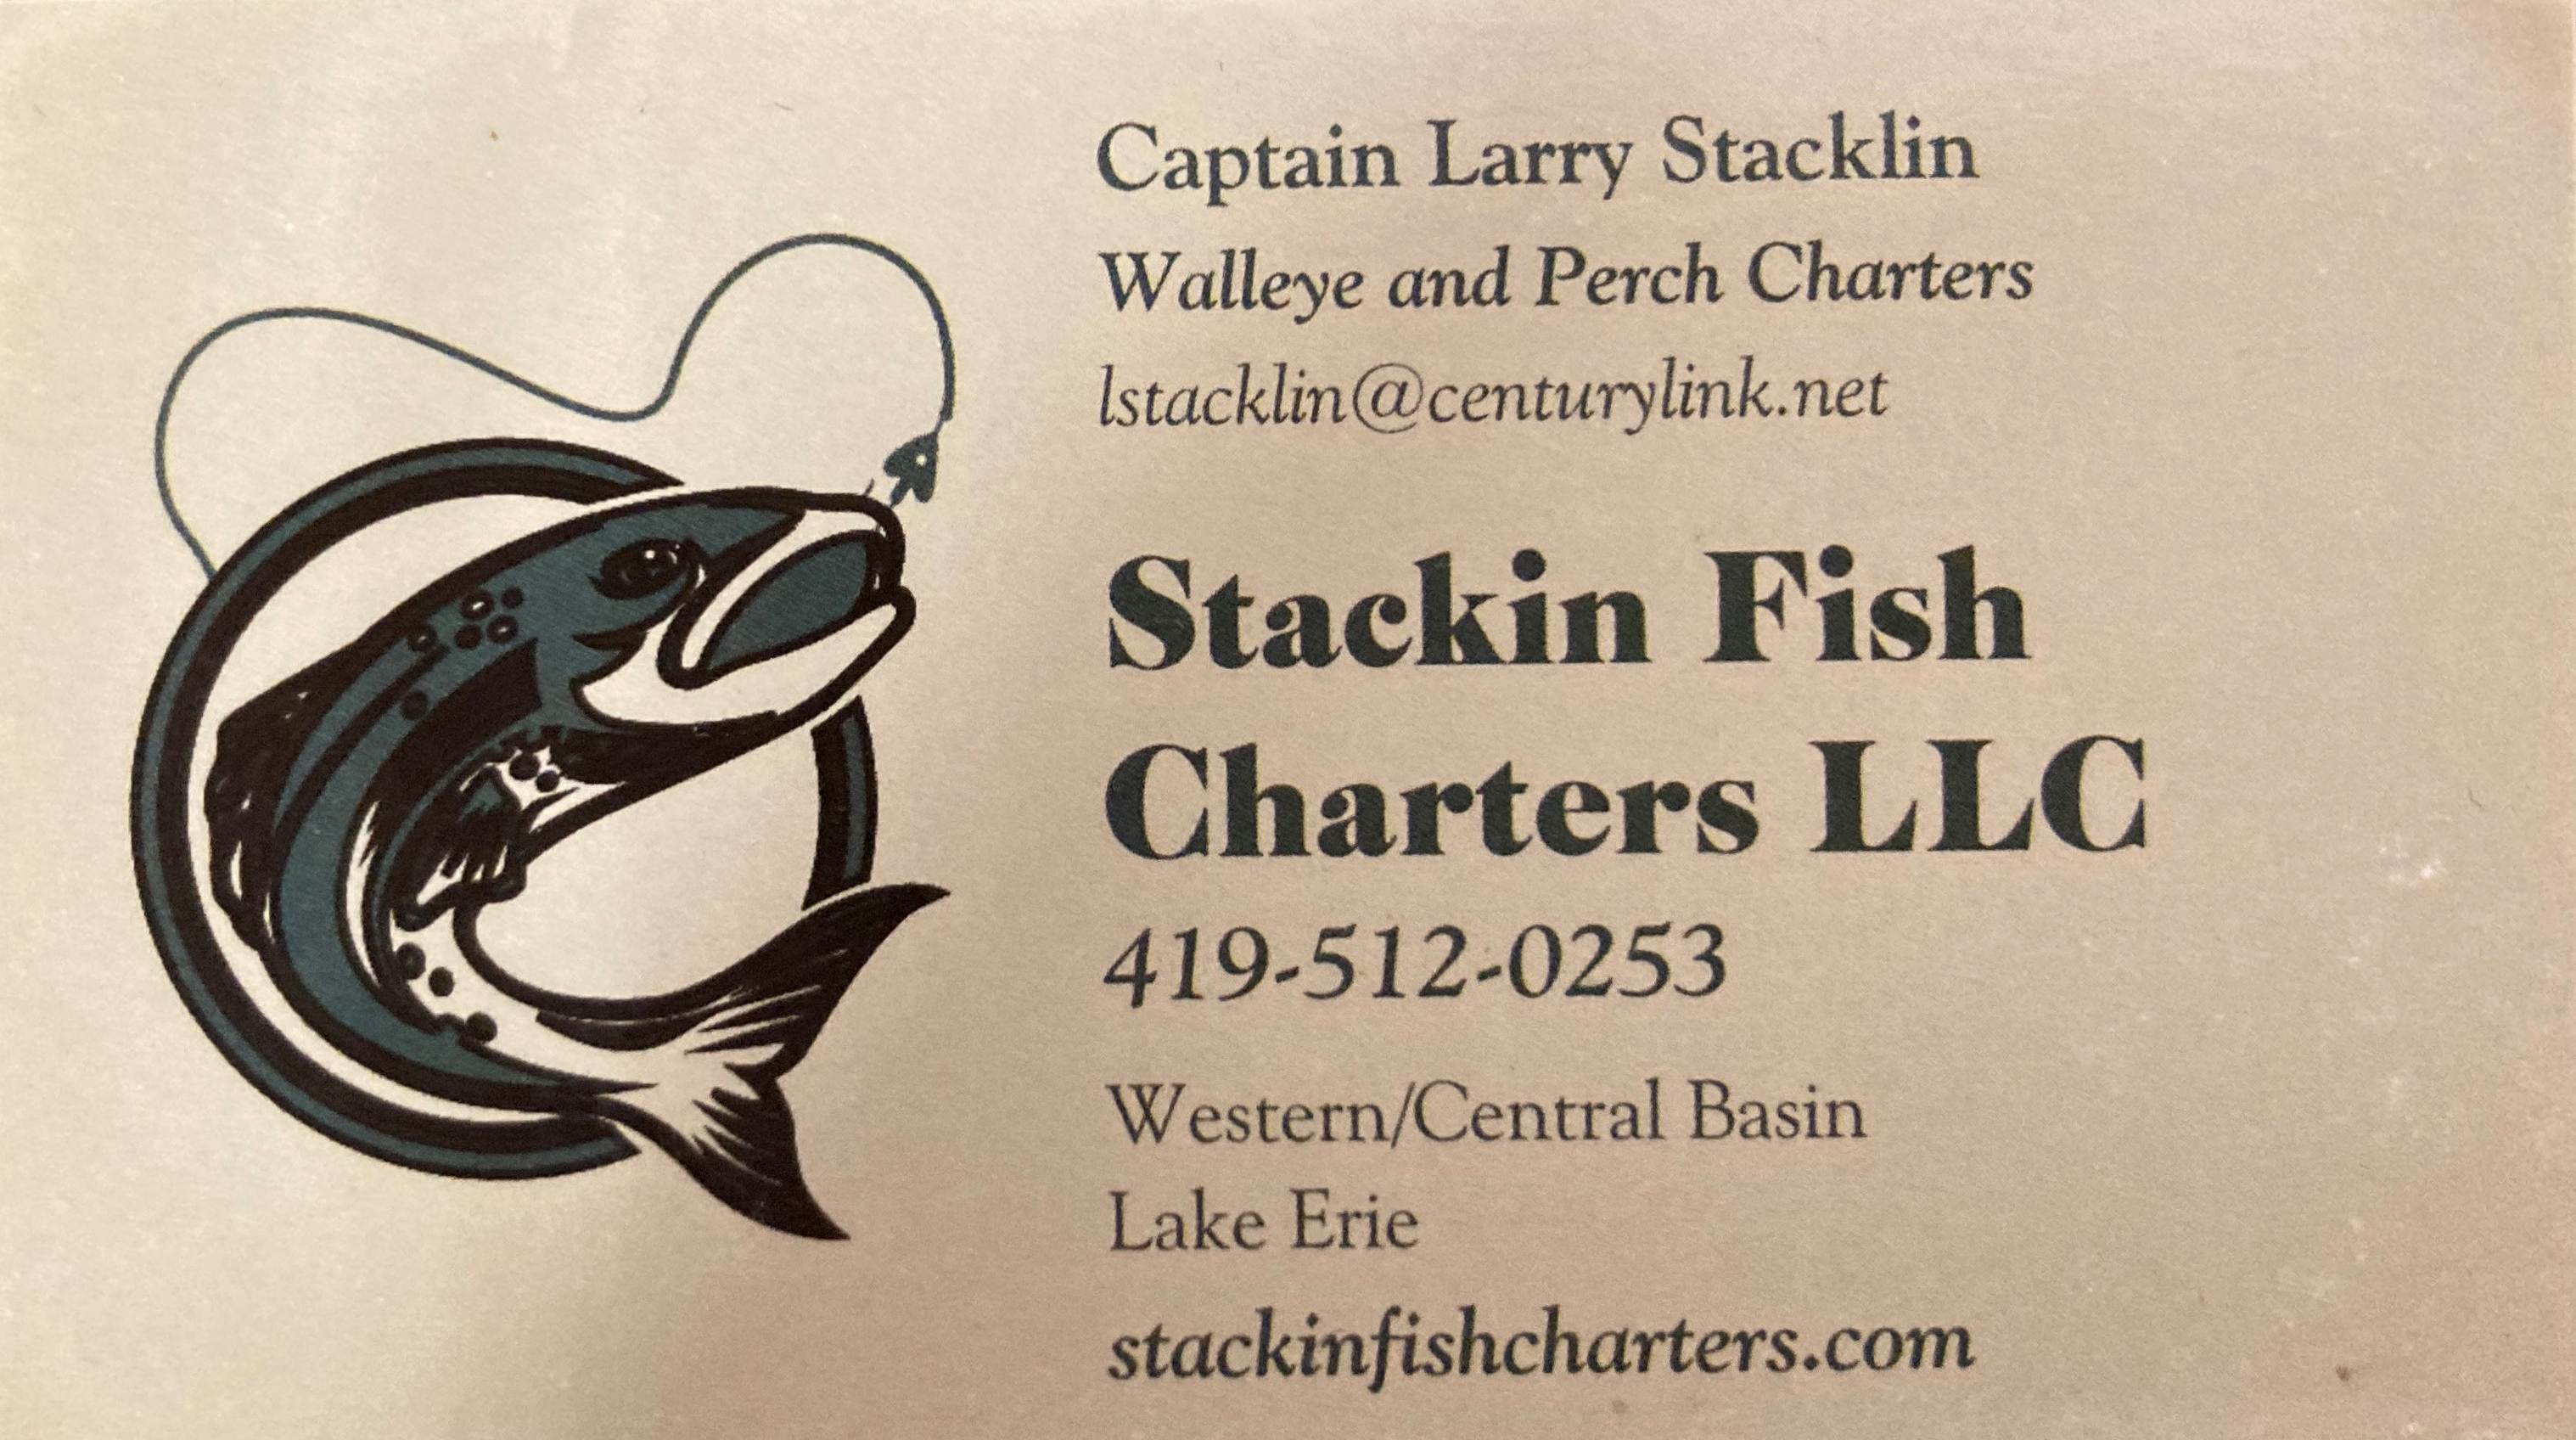 Stackin Fish Charters LLC